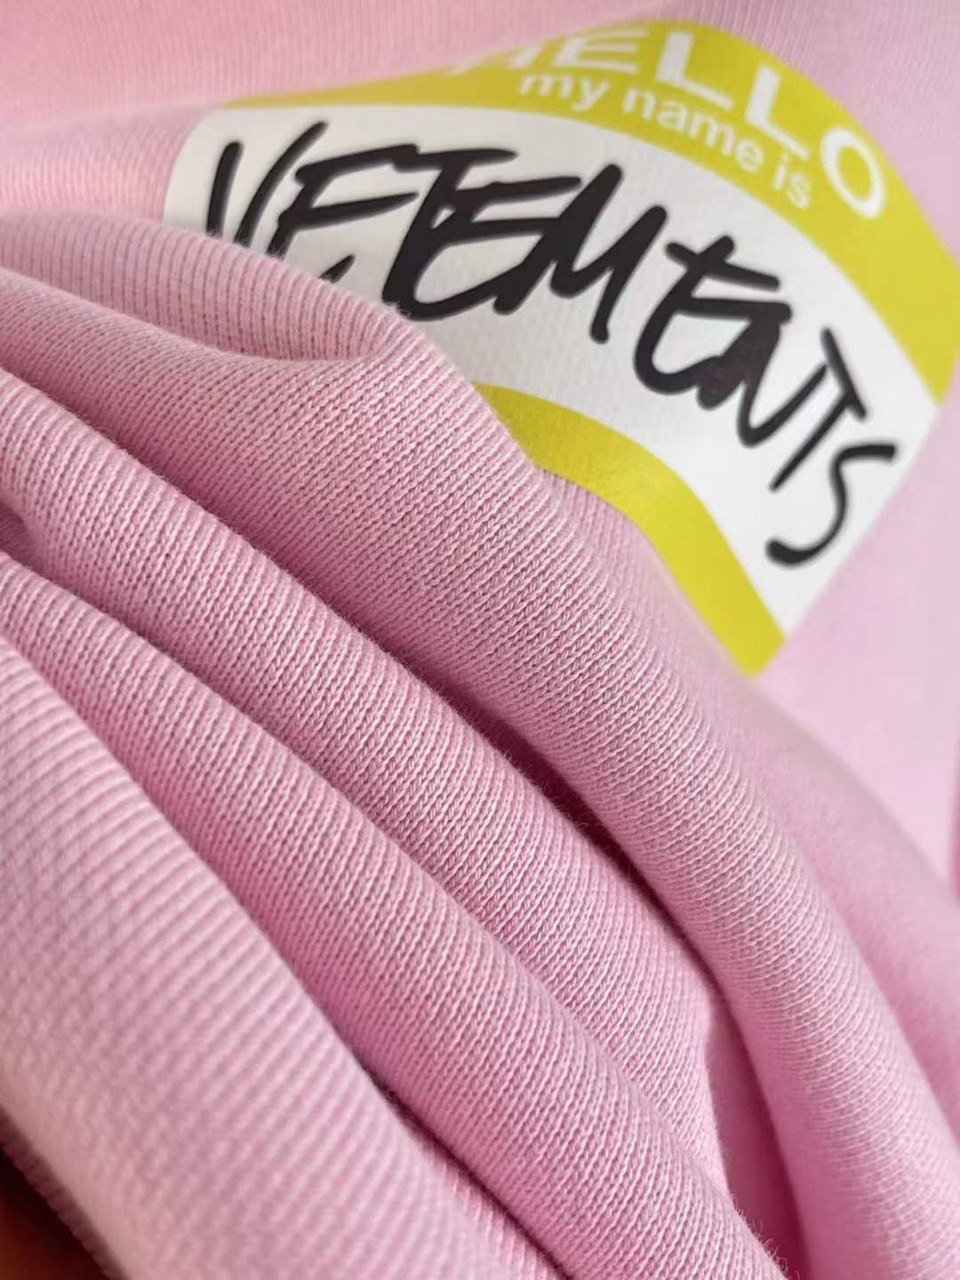 VETEMENTS Logo Print Pink Sweatshirt